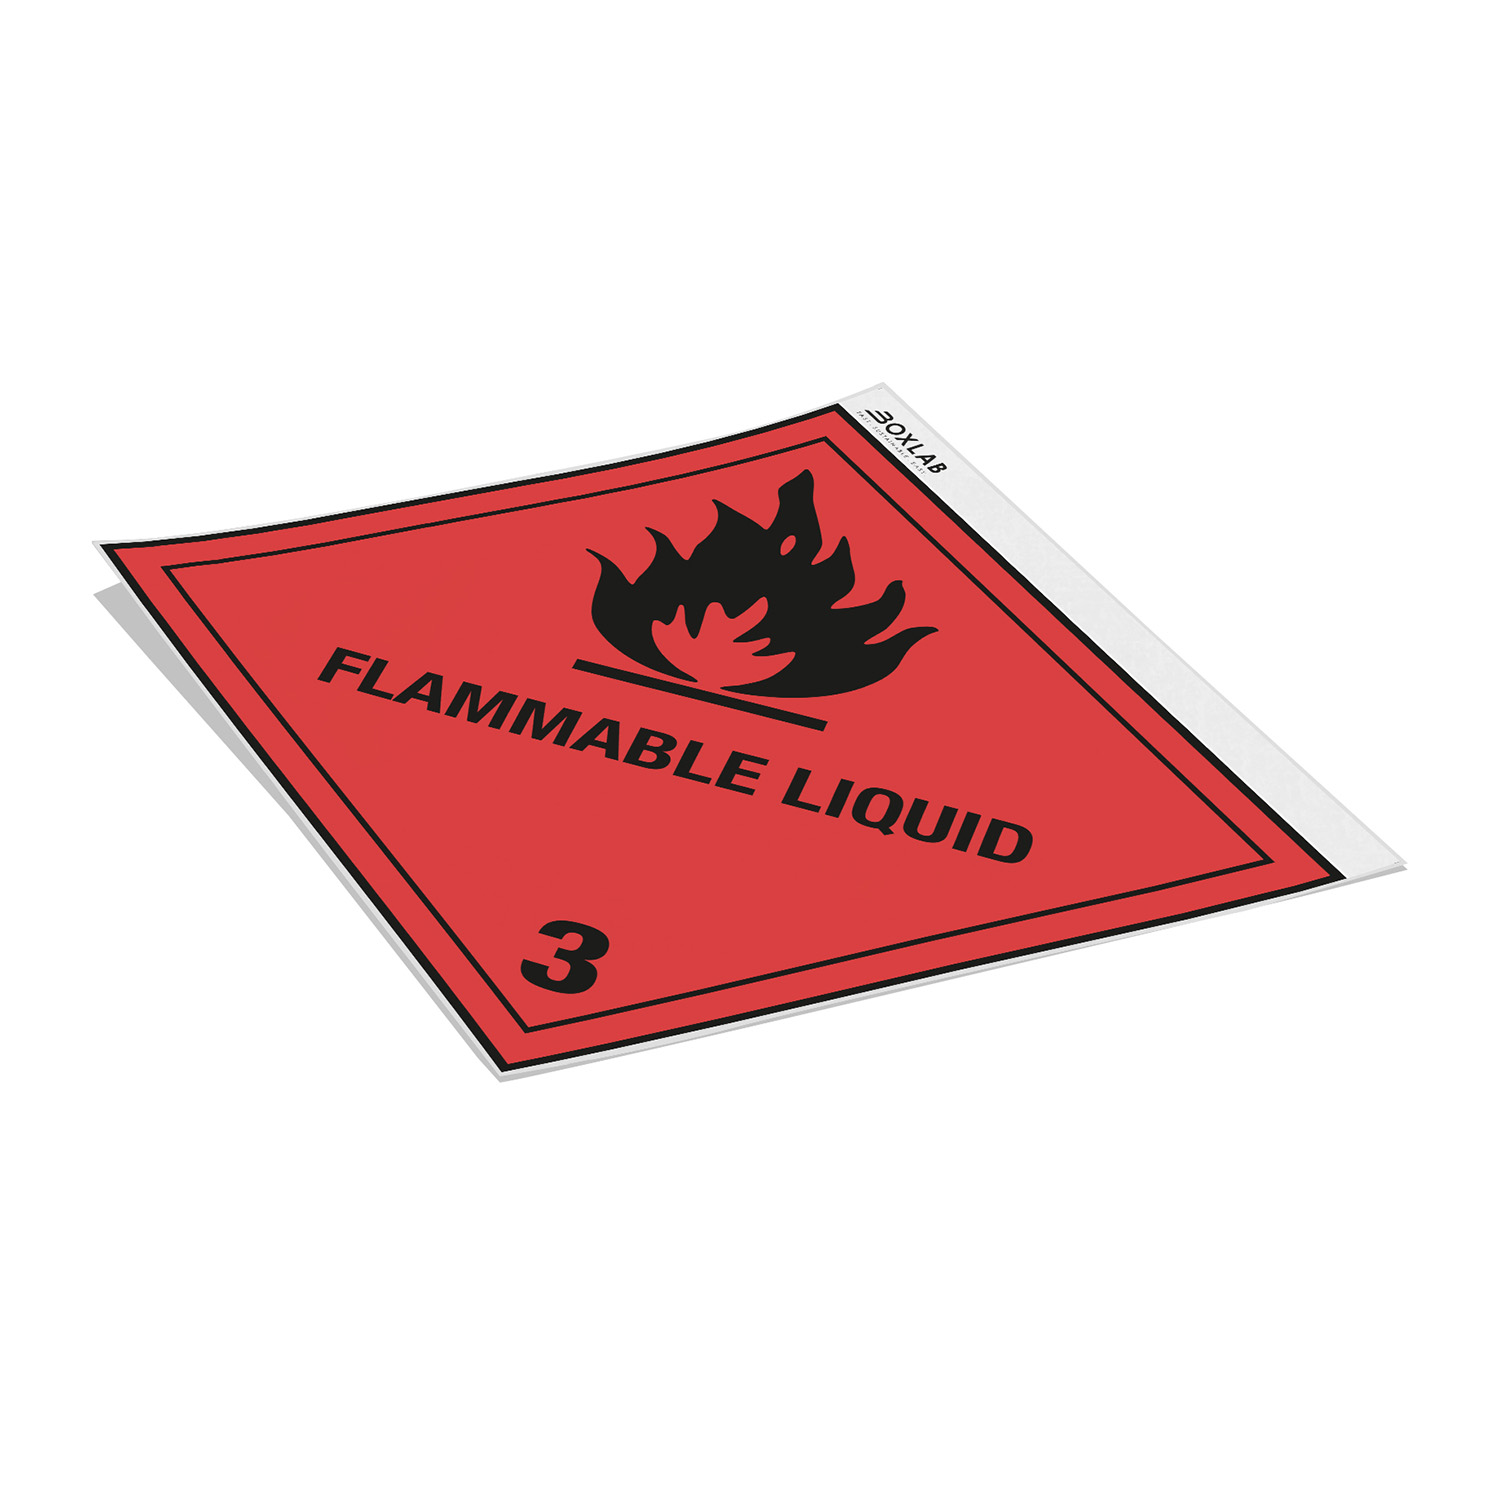 Placard Cl. 3, Flammable Liquid, 250x250mm, 1 pc per sheet